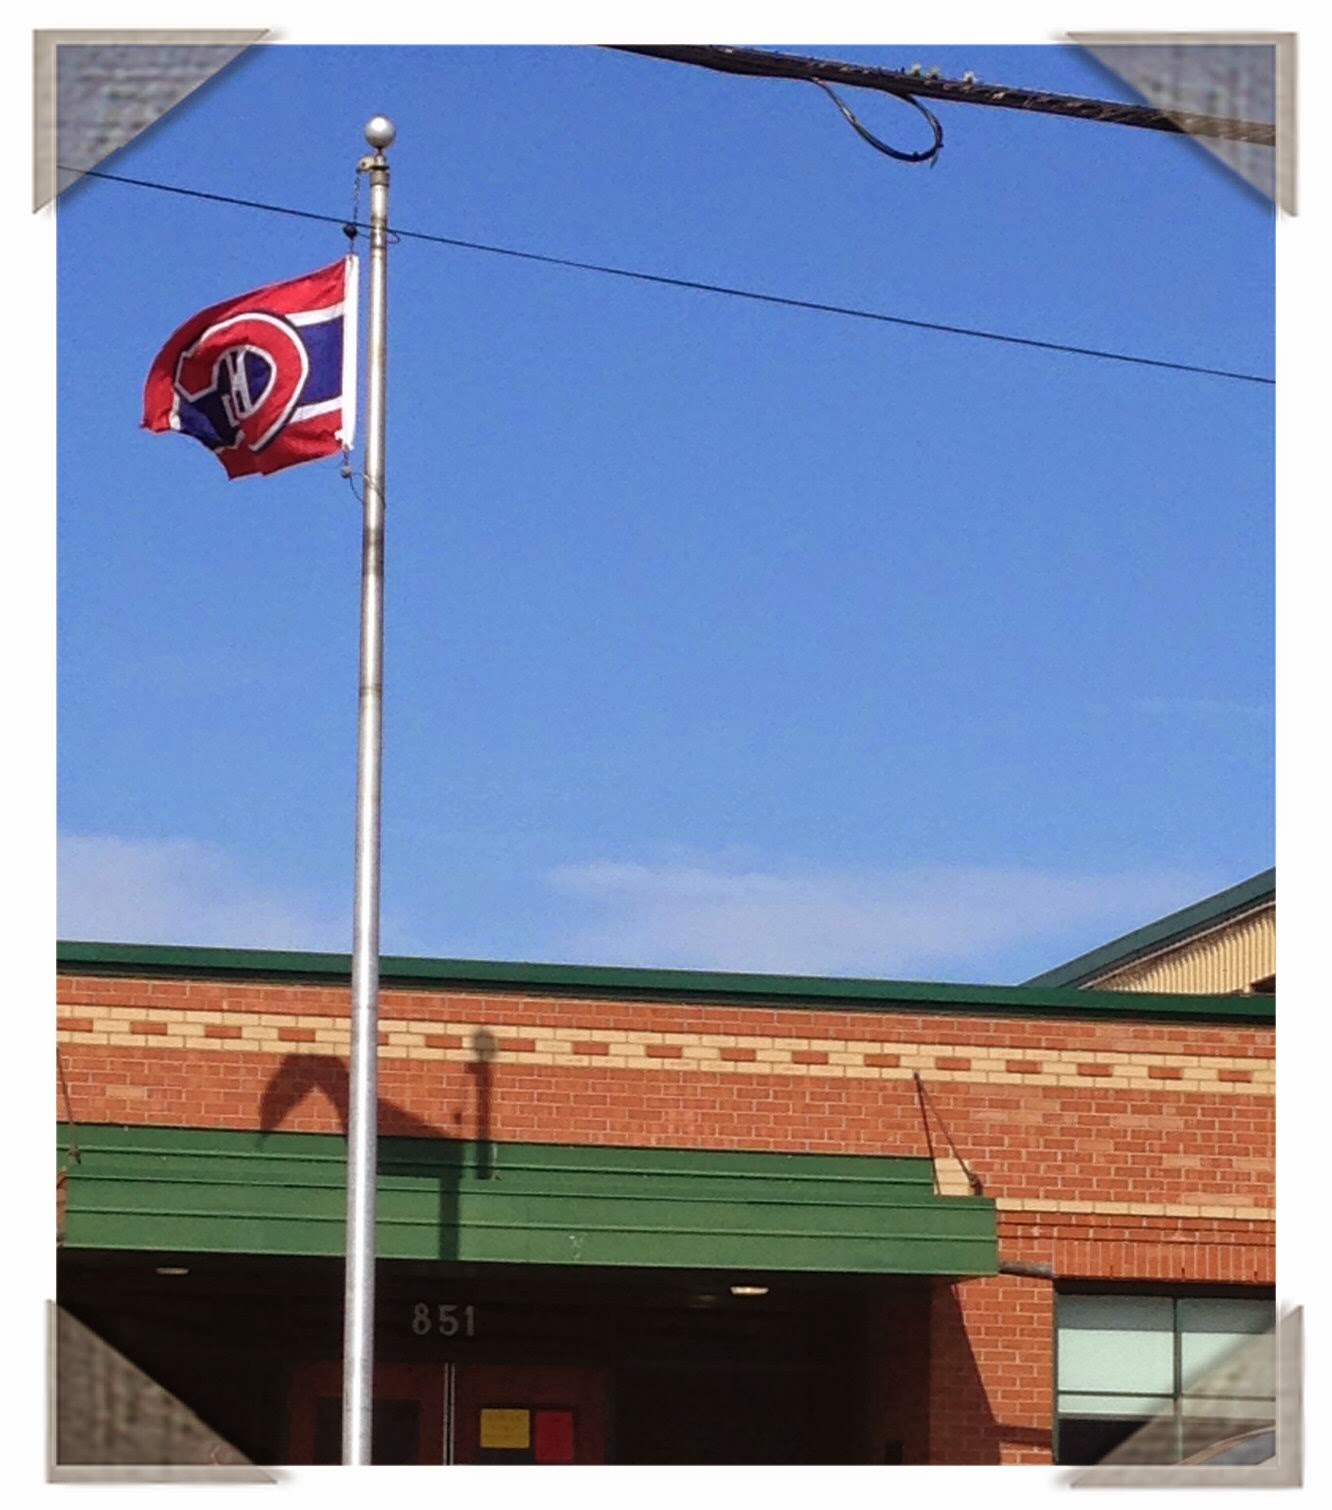 Habs flag flies outside West Island College in Dollard-des-Ormeaux, Quebec